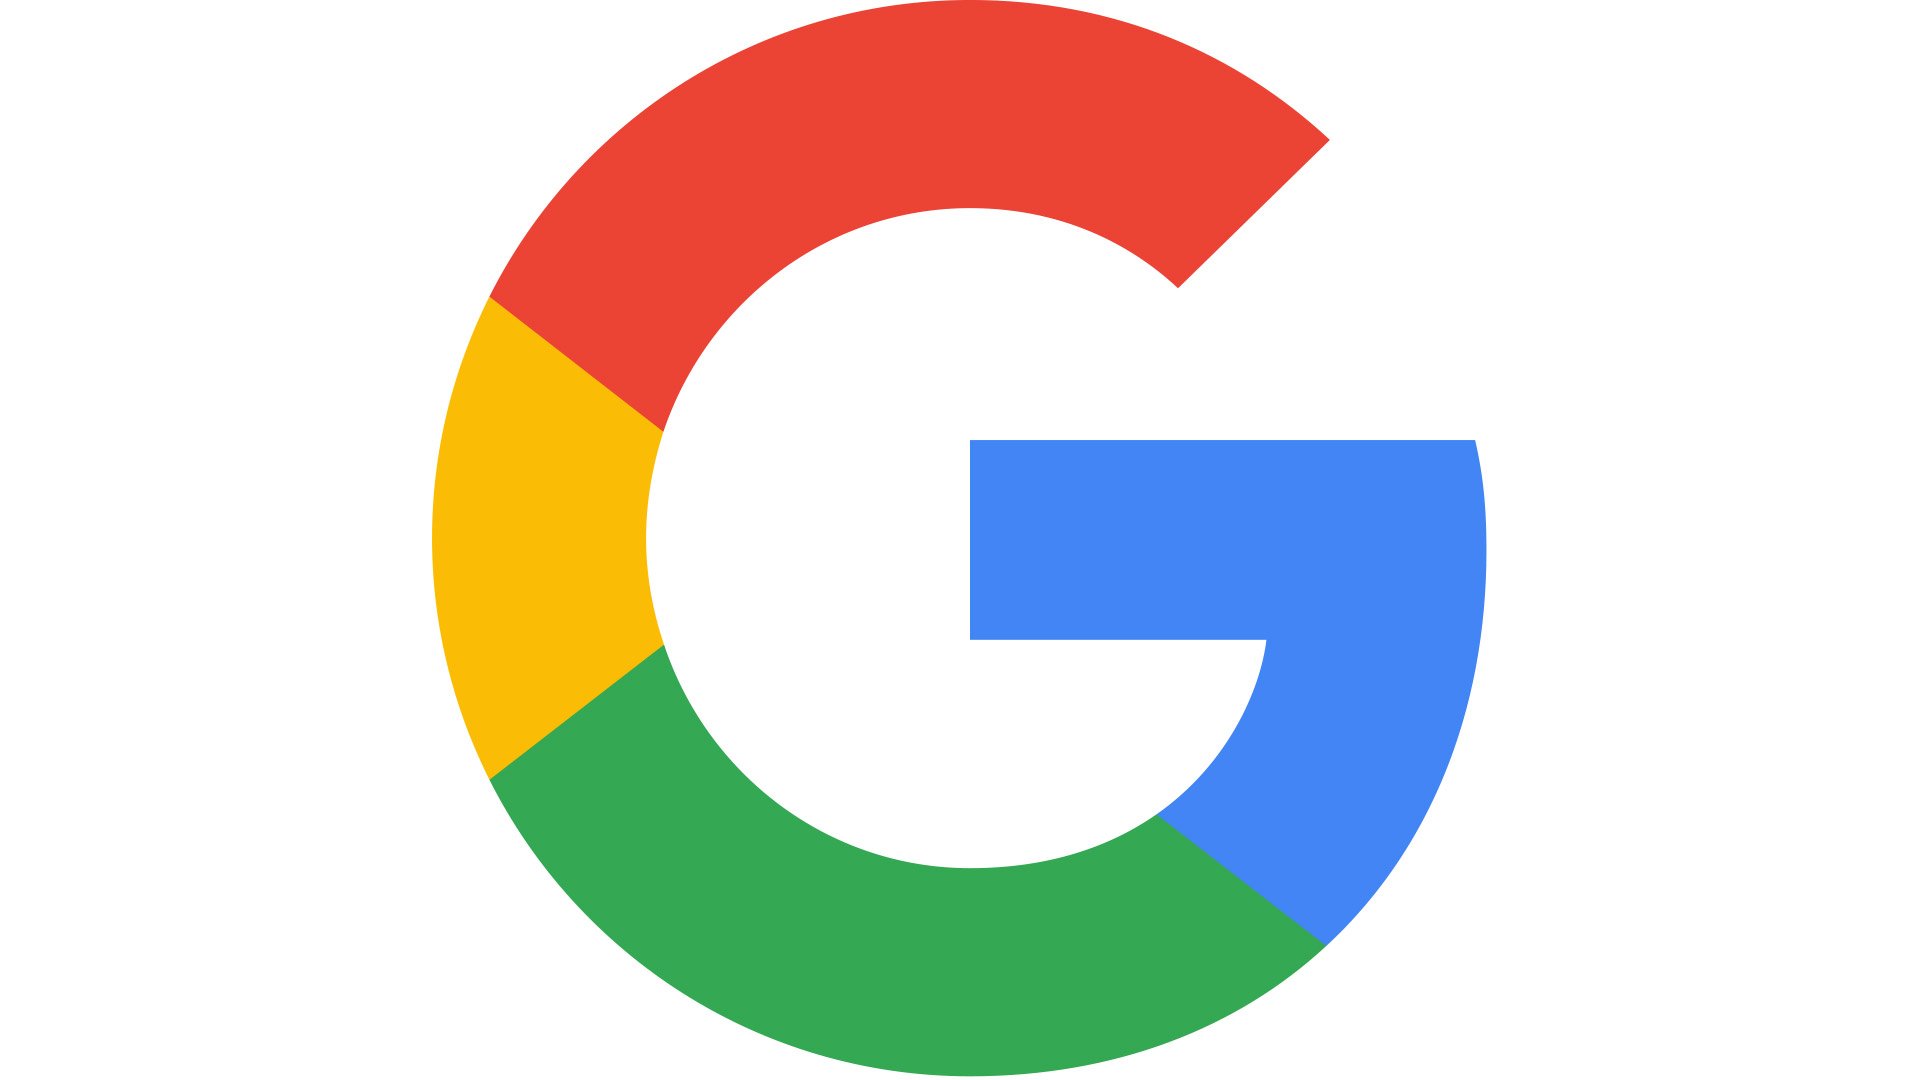 Google-Apps